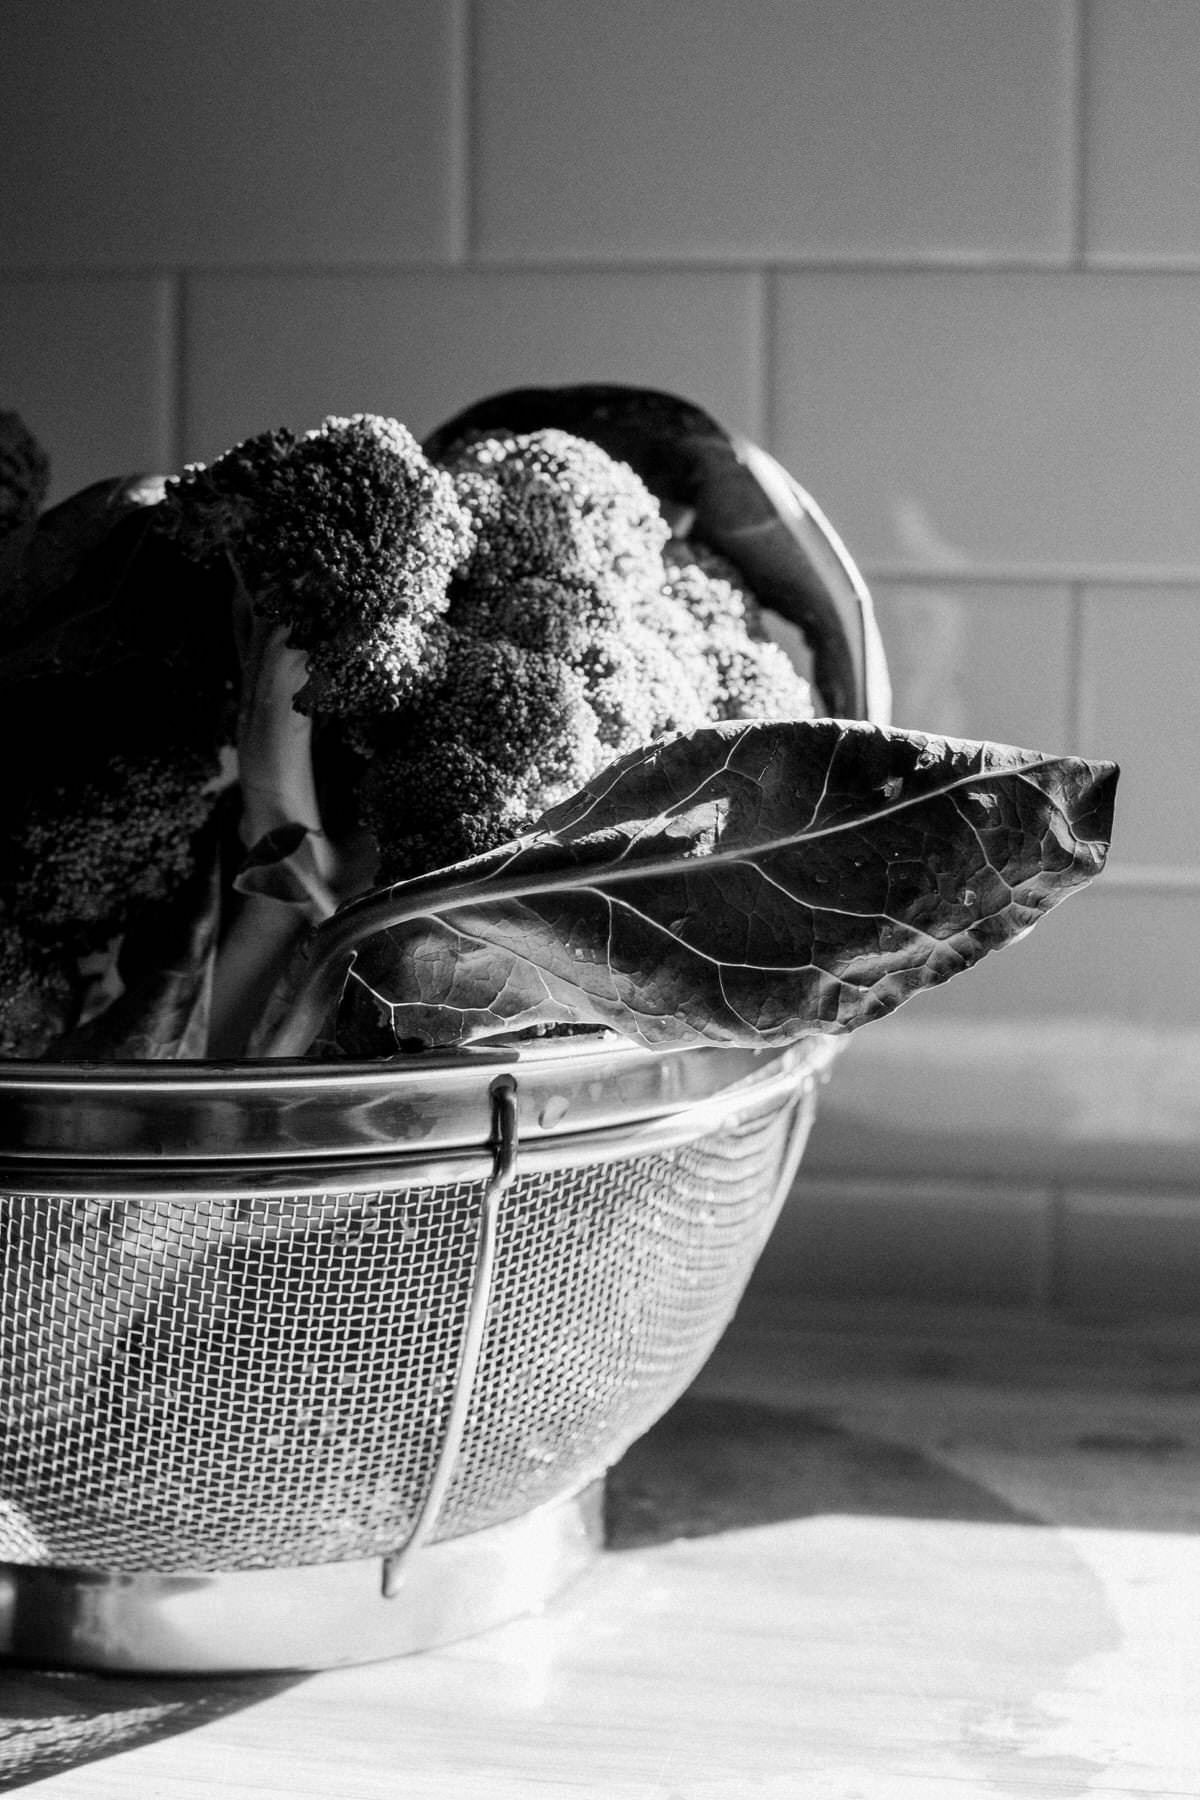 Organic-broccoli-from-Park-Ridge-Organics-Fond-du-Lac-Wisconsin-black-and-white-fine-art-photography-by-Studio-L-photographer-Laura-Schneider-_12139